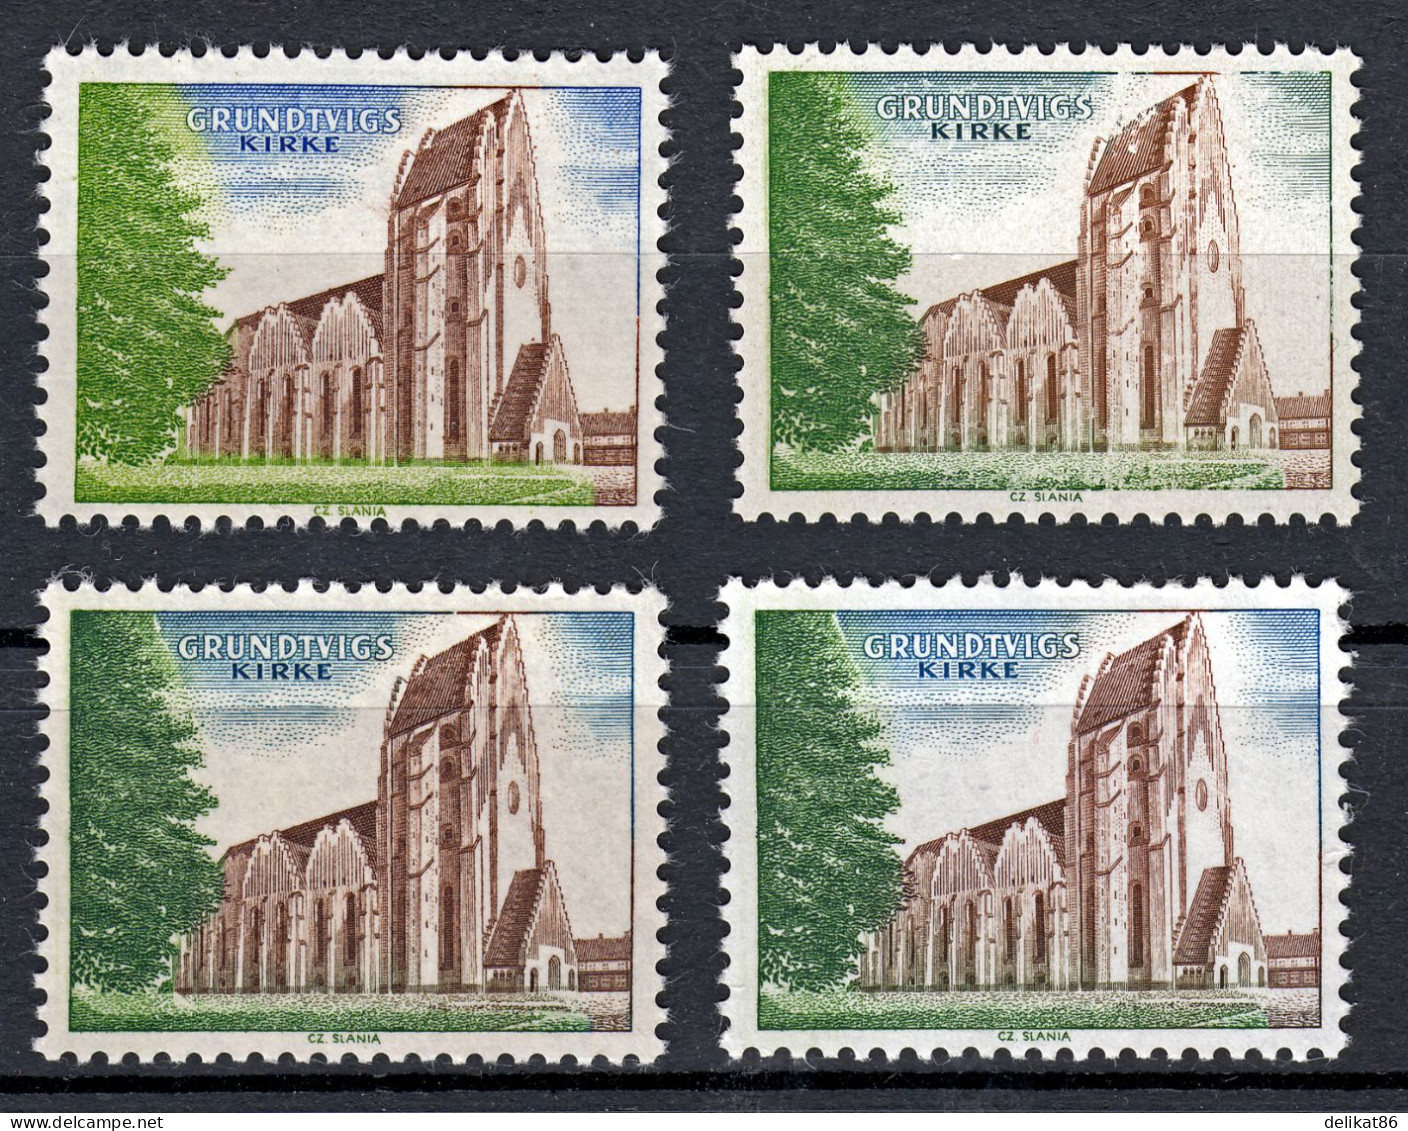 Probedruck Test Stamp Specimen Prøve Grundtvig Kirke Slania 1968   4 Verschiedene Marken - Ensayos & Reimpresiones